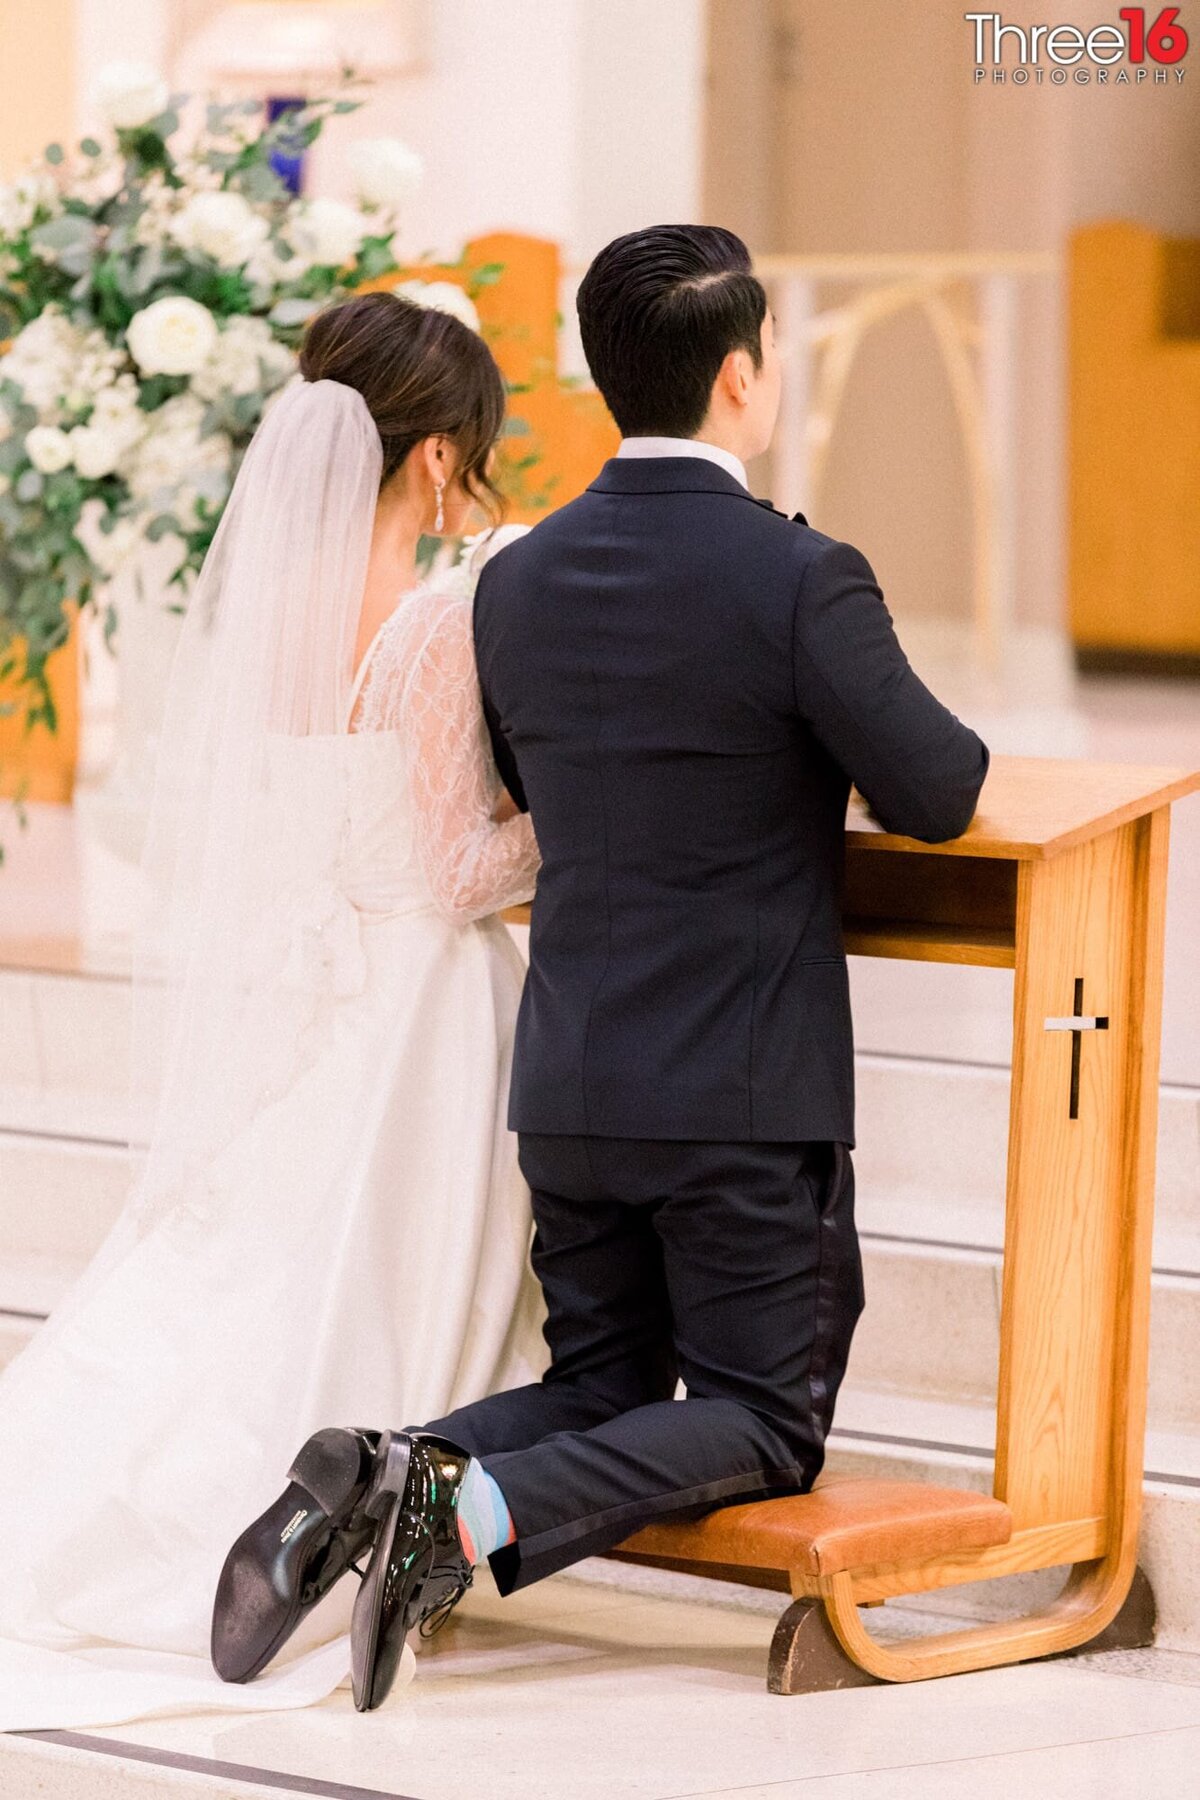 Bride and Groom kneel during their Catholic Wedding Ceremony